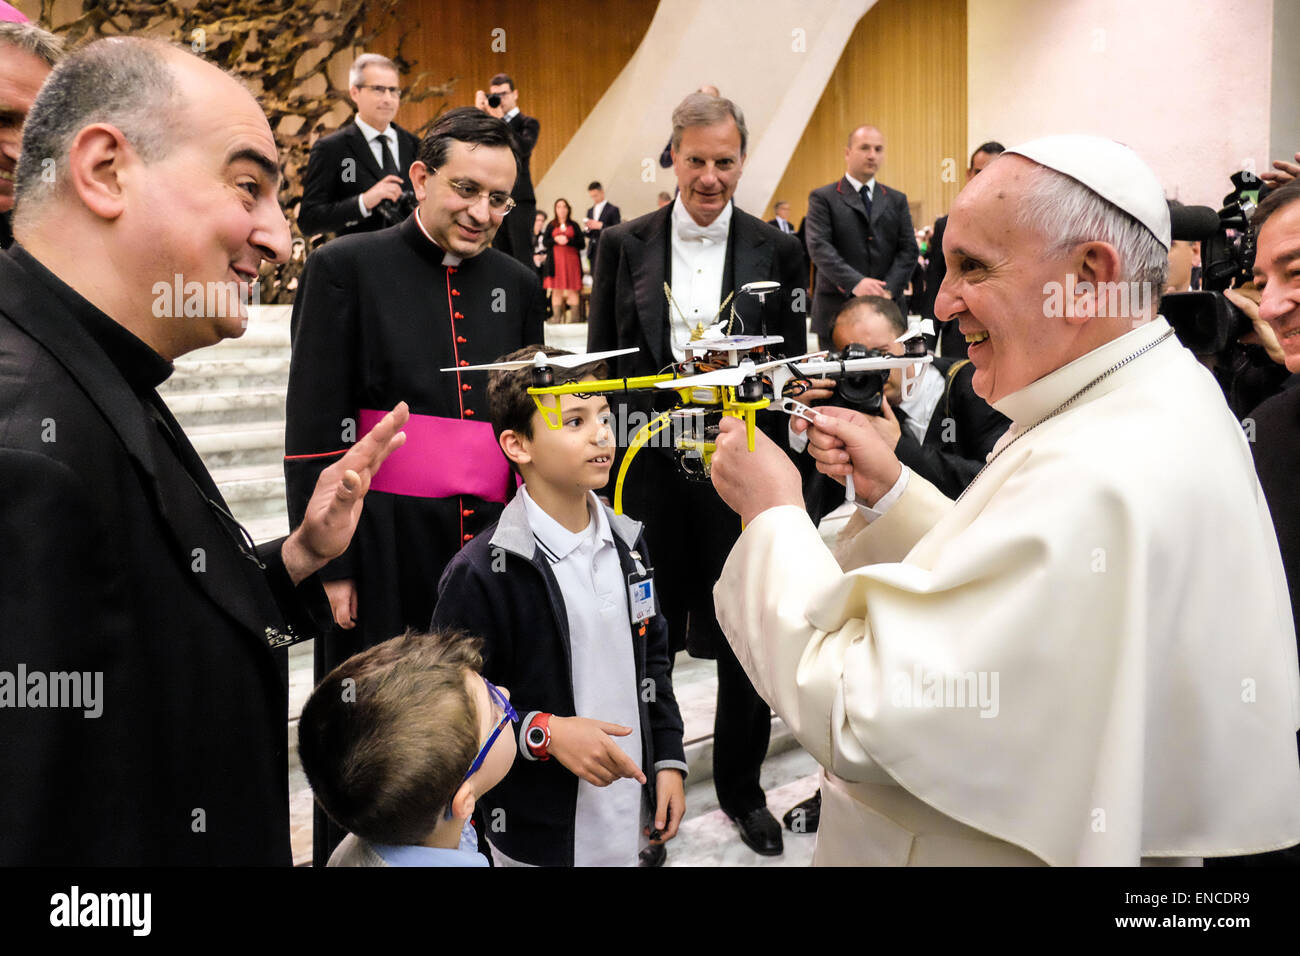 Vatikan. 30. April 2015. Ein Kind Geschenk an Papst Francis eine Drohne Publikum im Saal Nervi, Vatikan 30. April 2015 Credit: wirklich Easy Star/Alamy Live News Stockfoto